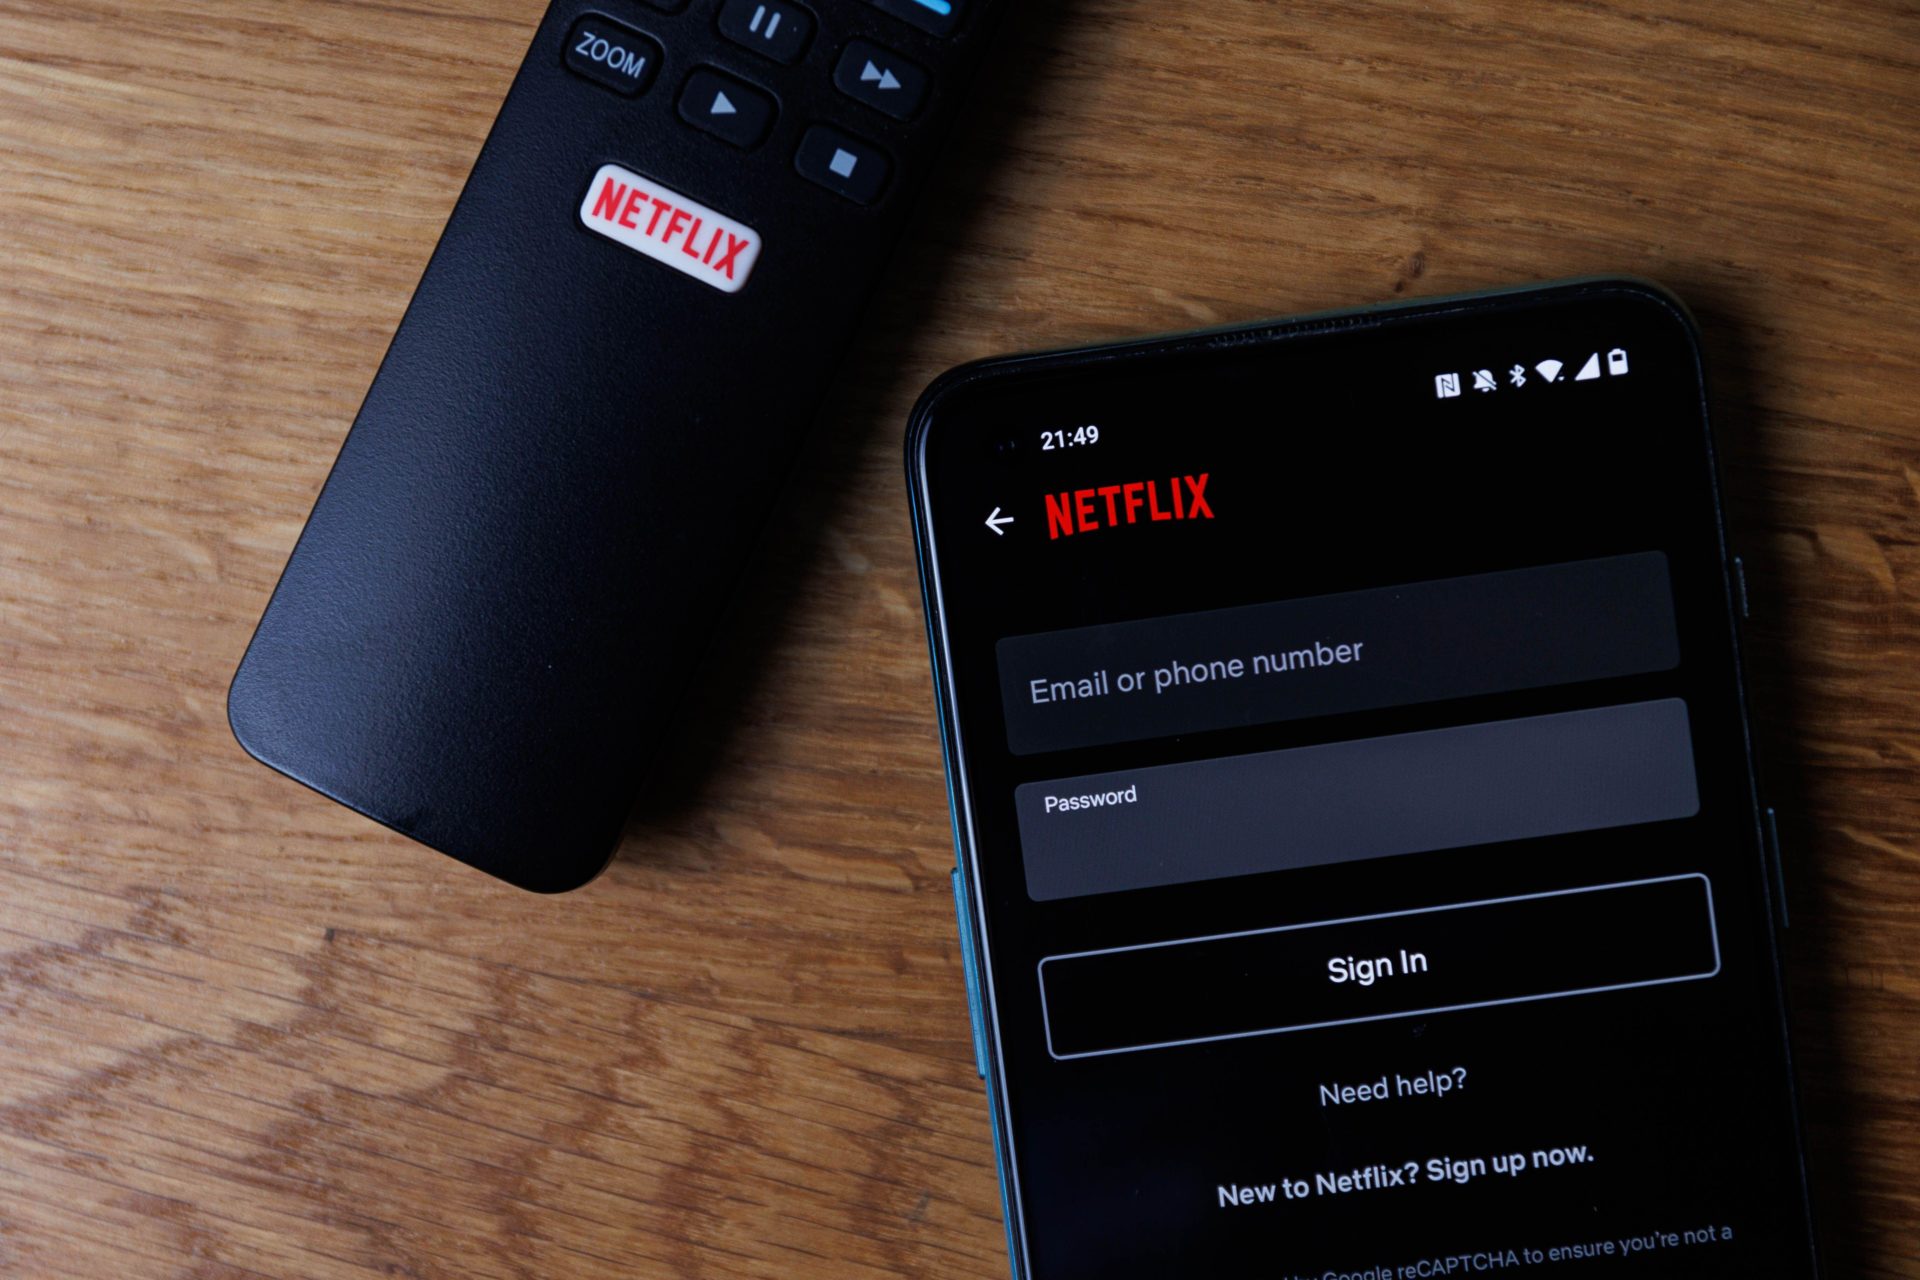 A Netflix login screen is seen on on a smartphone display